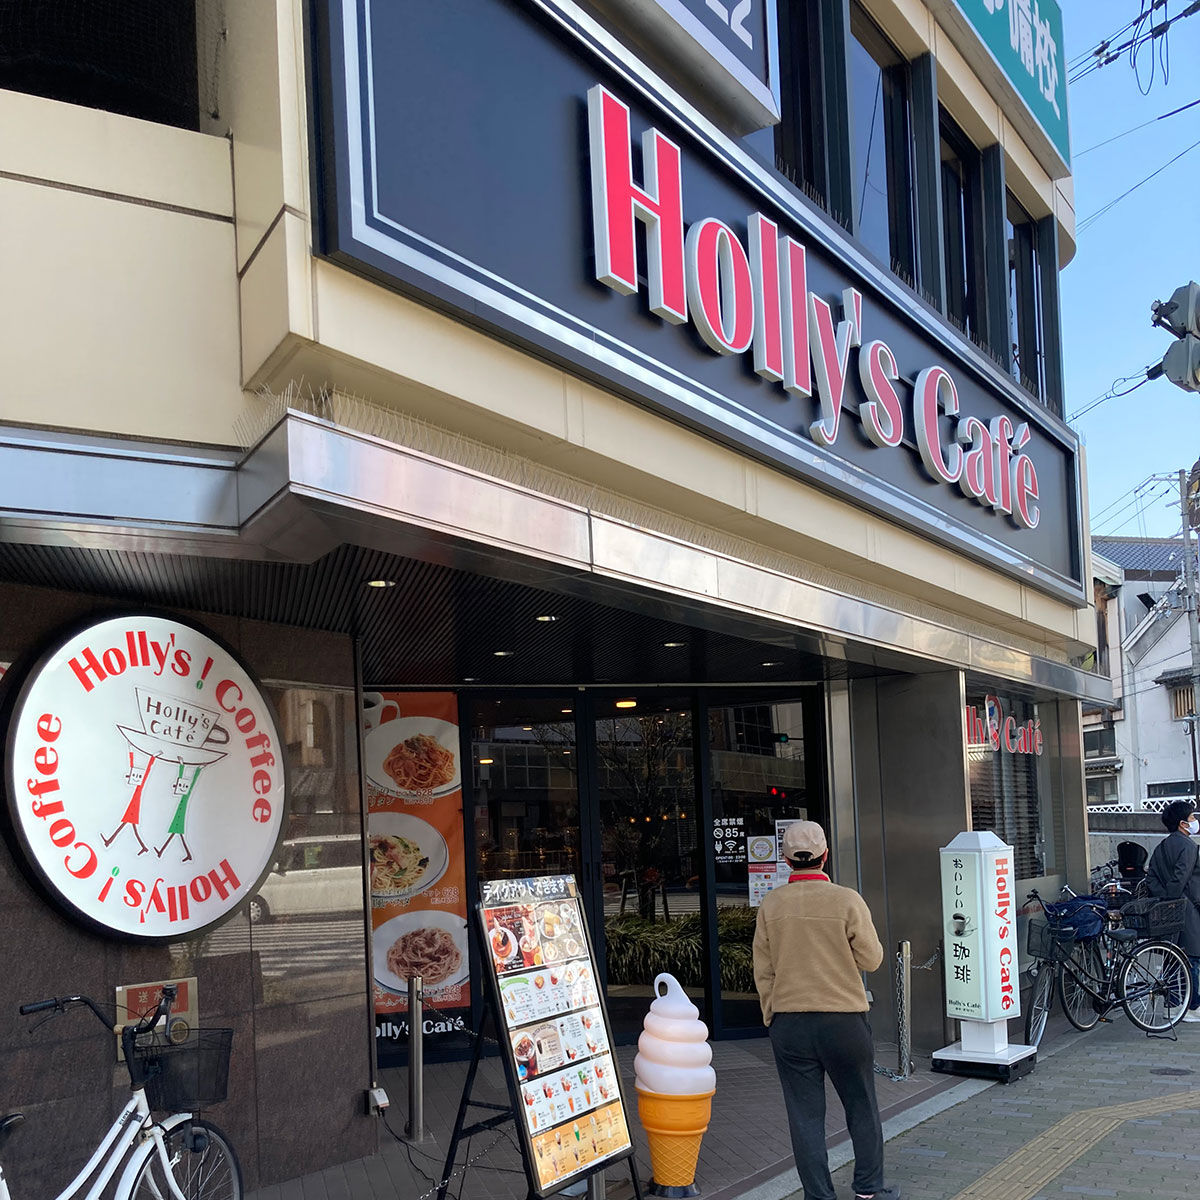 十三 - Holly's cafe 十三店